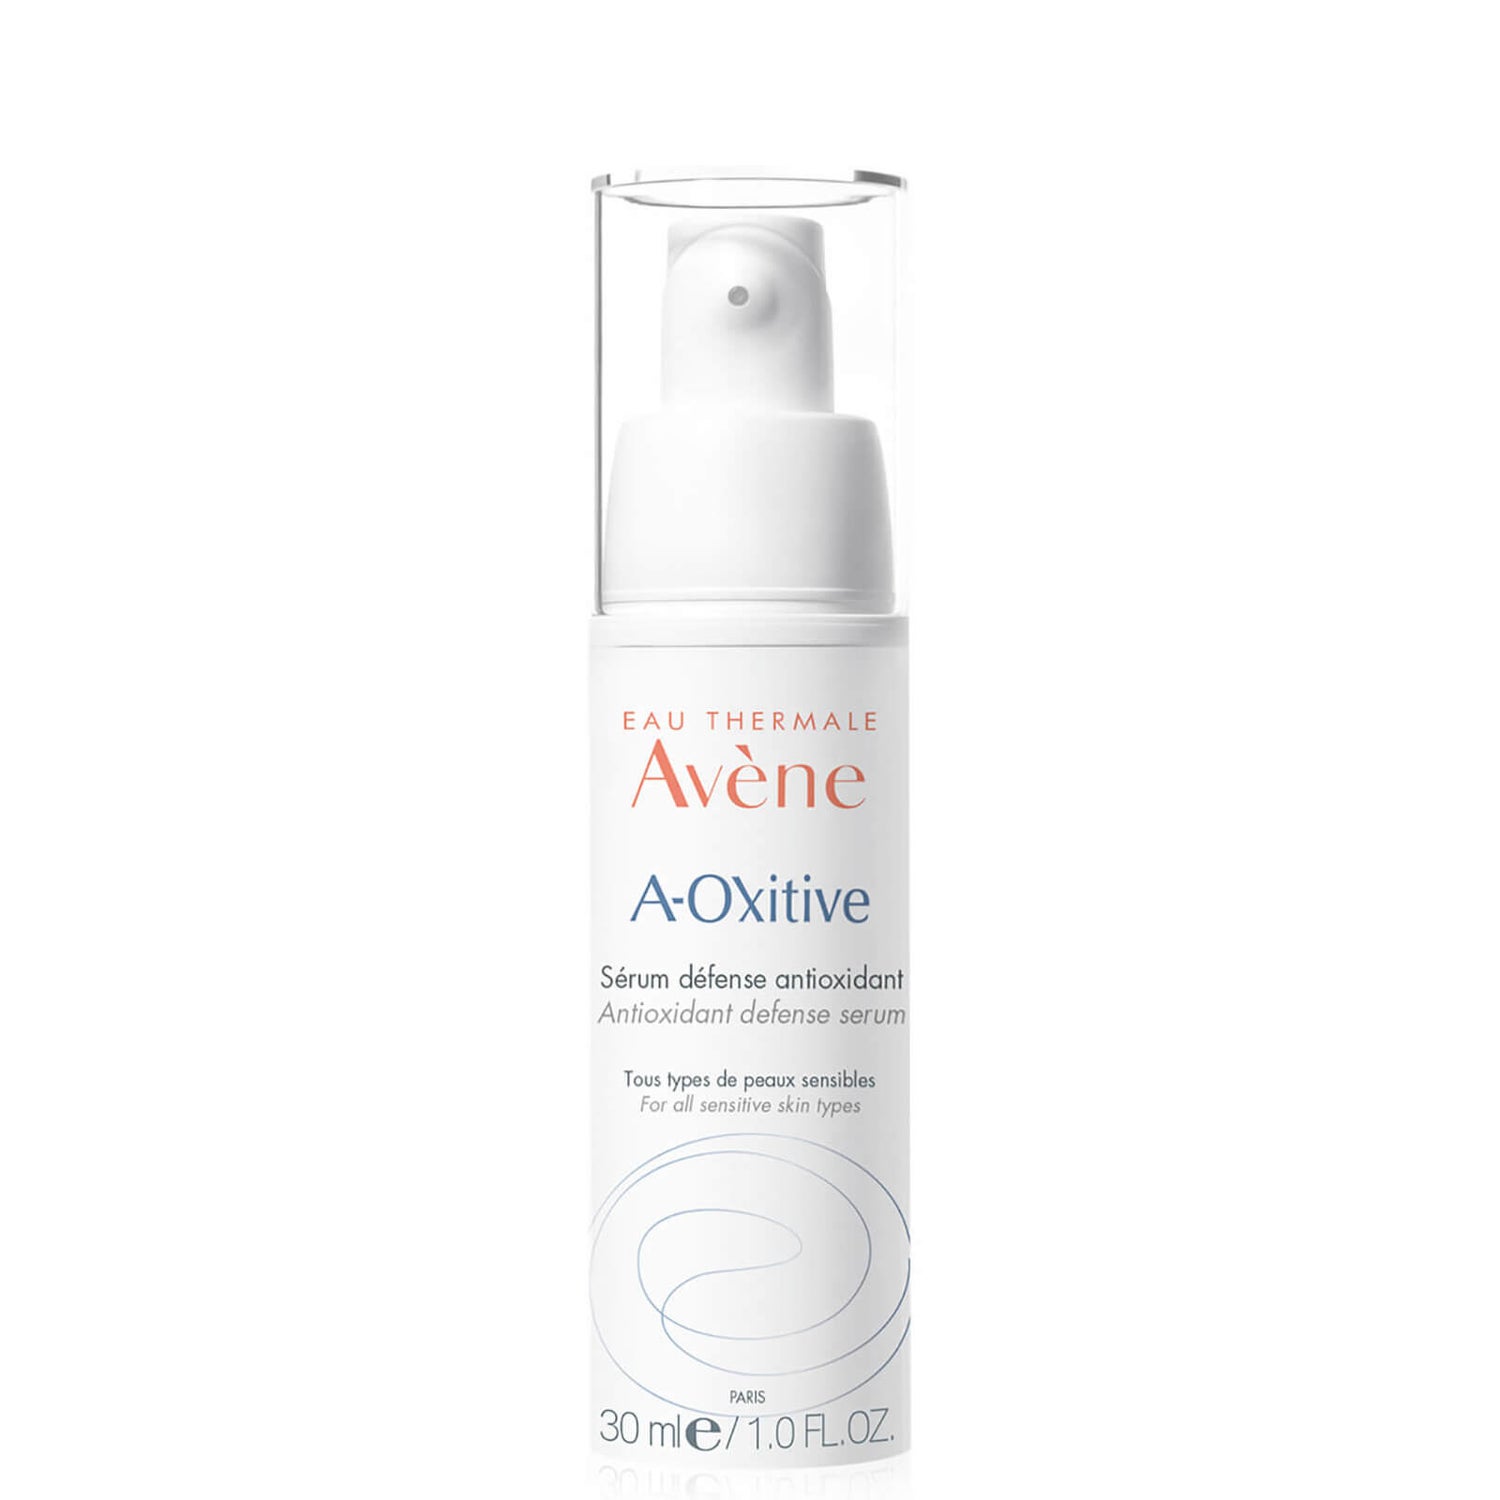 Avène A-Oxitive Antioxidant Defense Serum 1.0 fl.oz